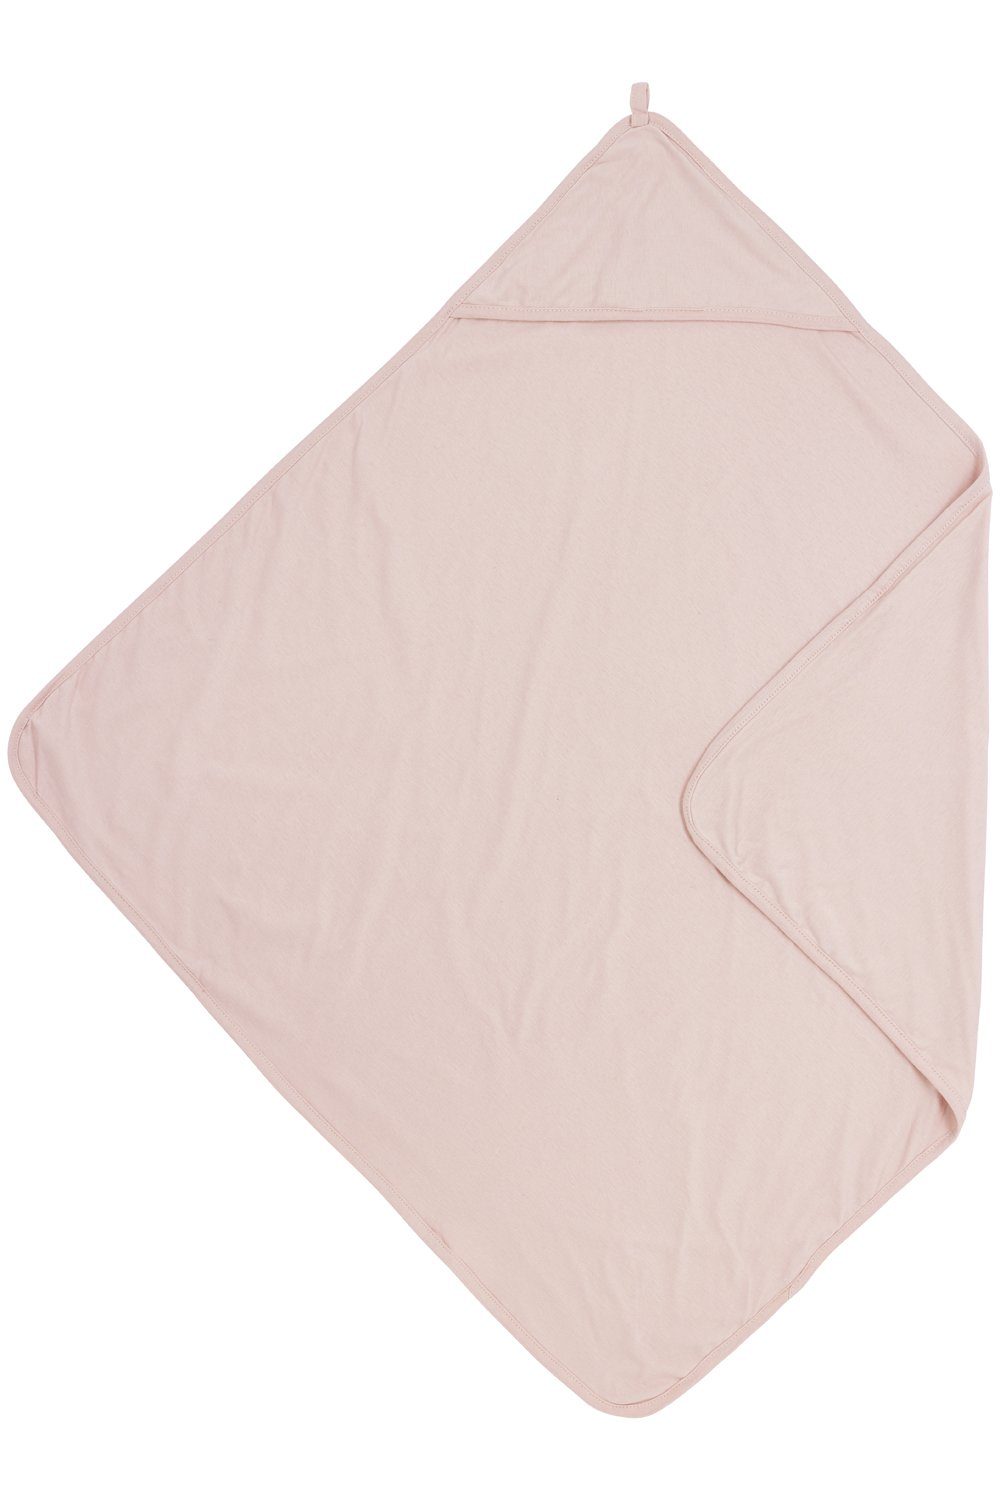 Meyco Baby Kapuzenhandtuch Uni Soft Pink, Jersey (1-St), 80x80cm | Kapuzenhandtücher